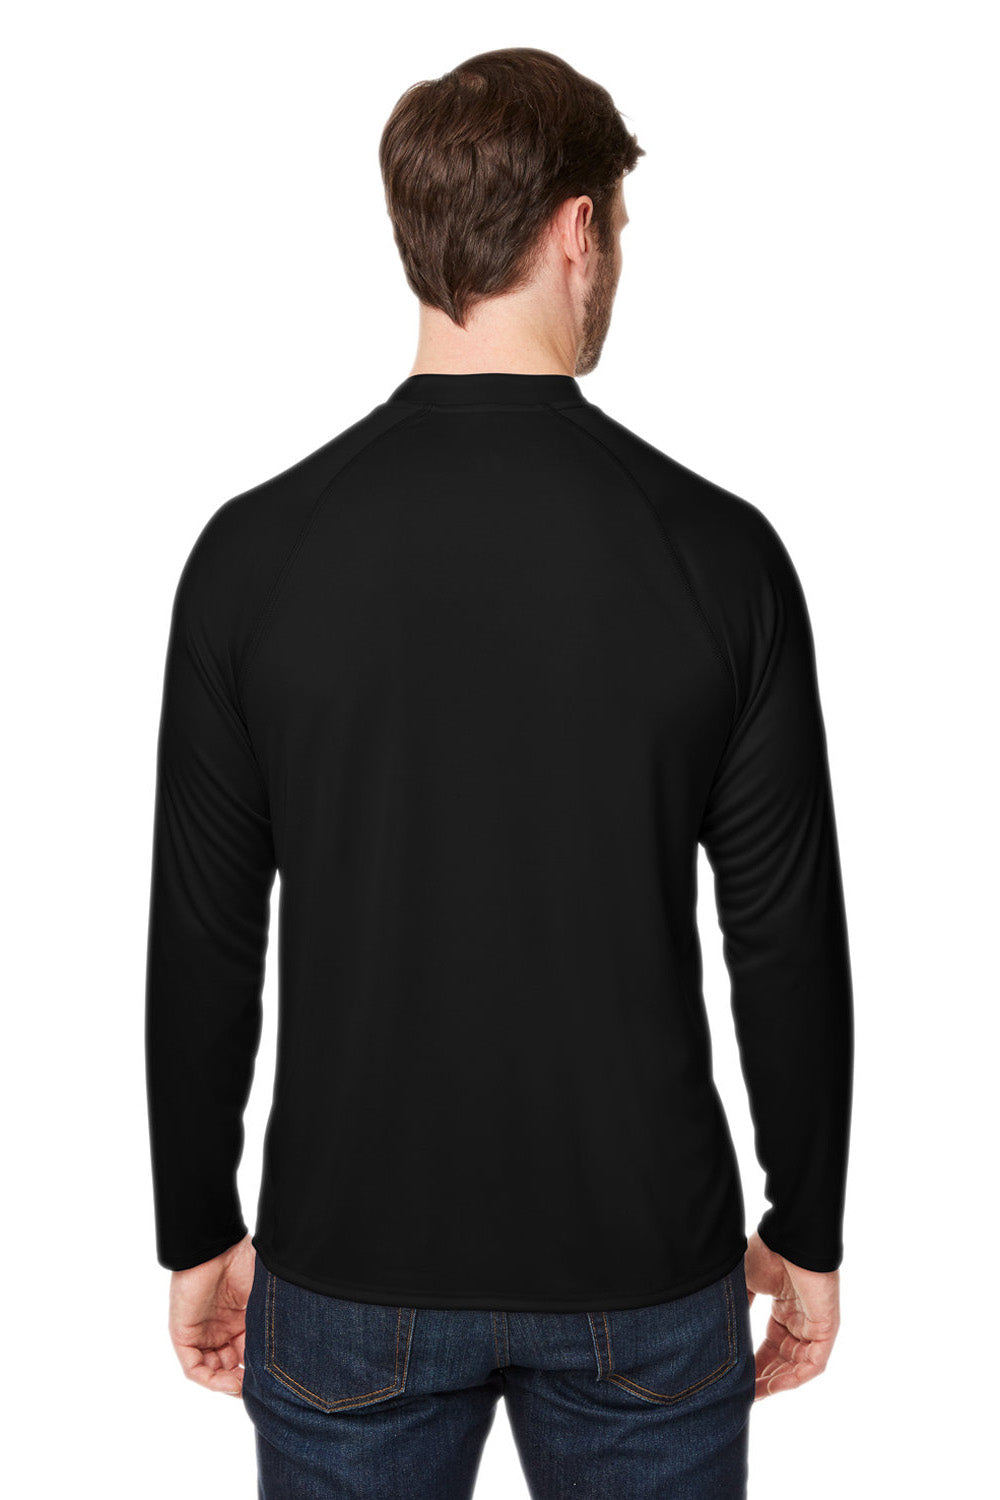 Core 365 CE110 Mens Ultra MVP Raglan Long Sleeve T-Shirt Black Back